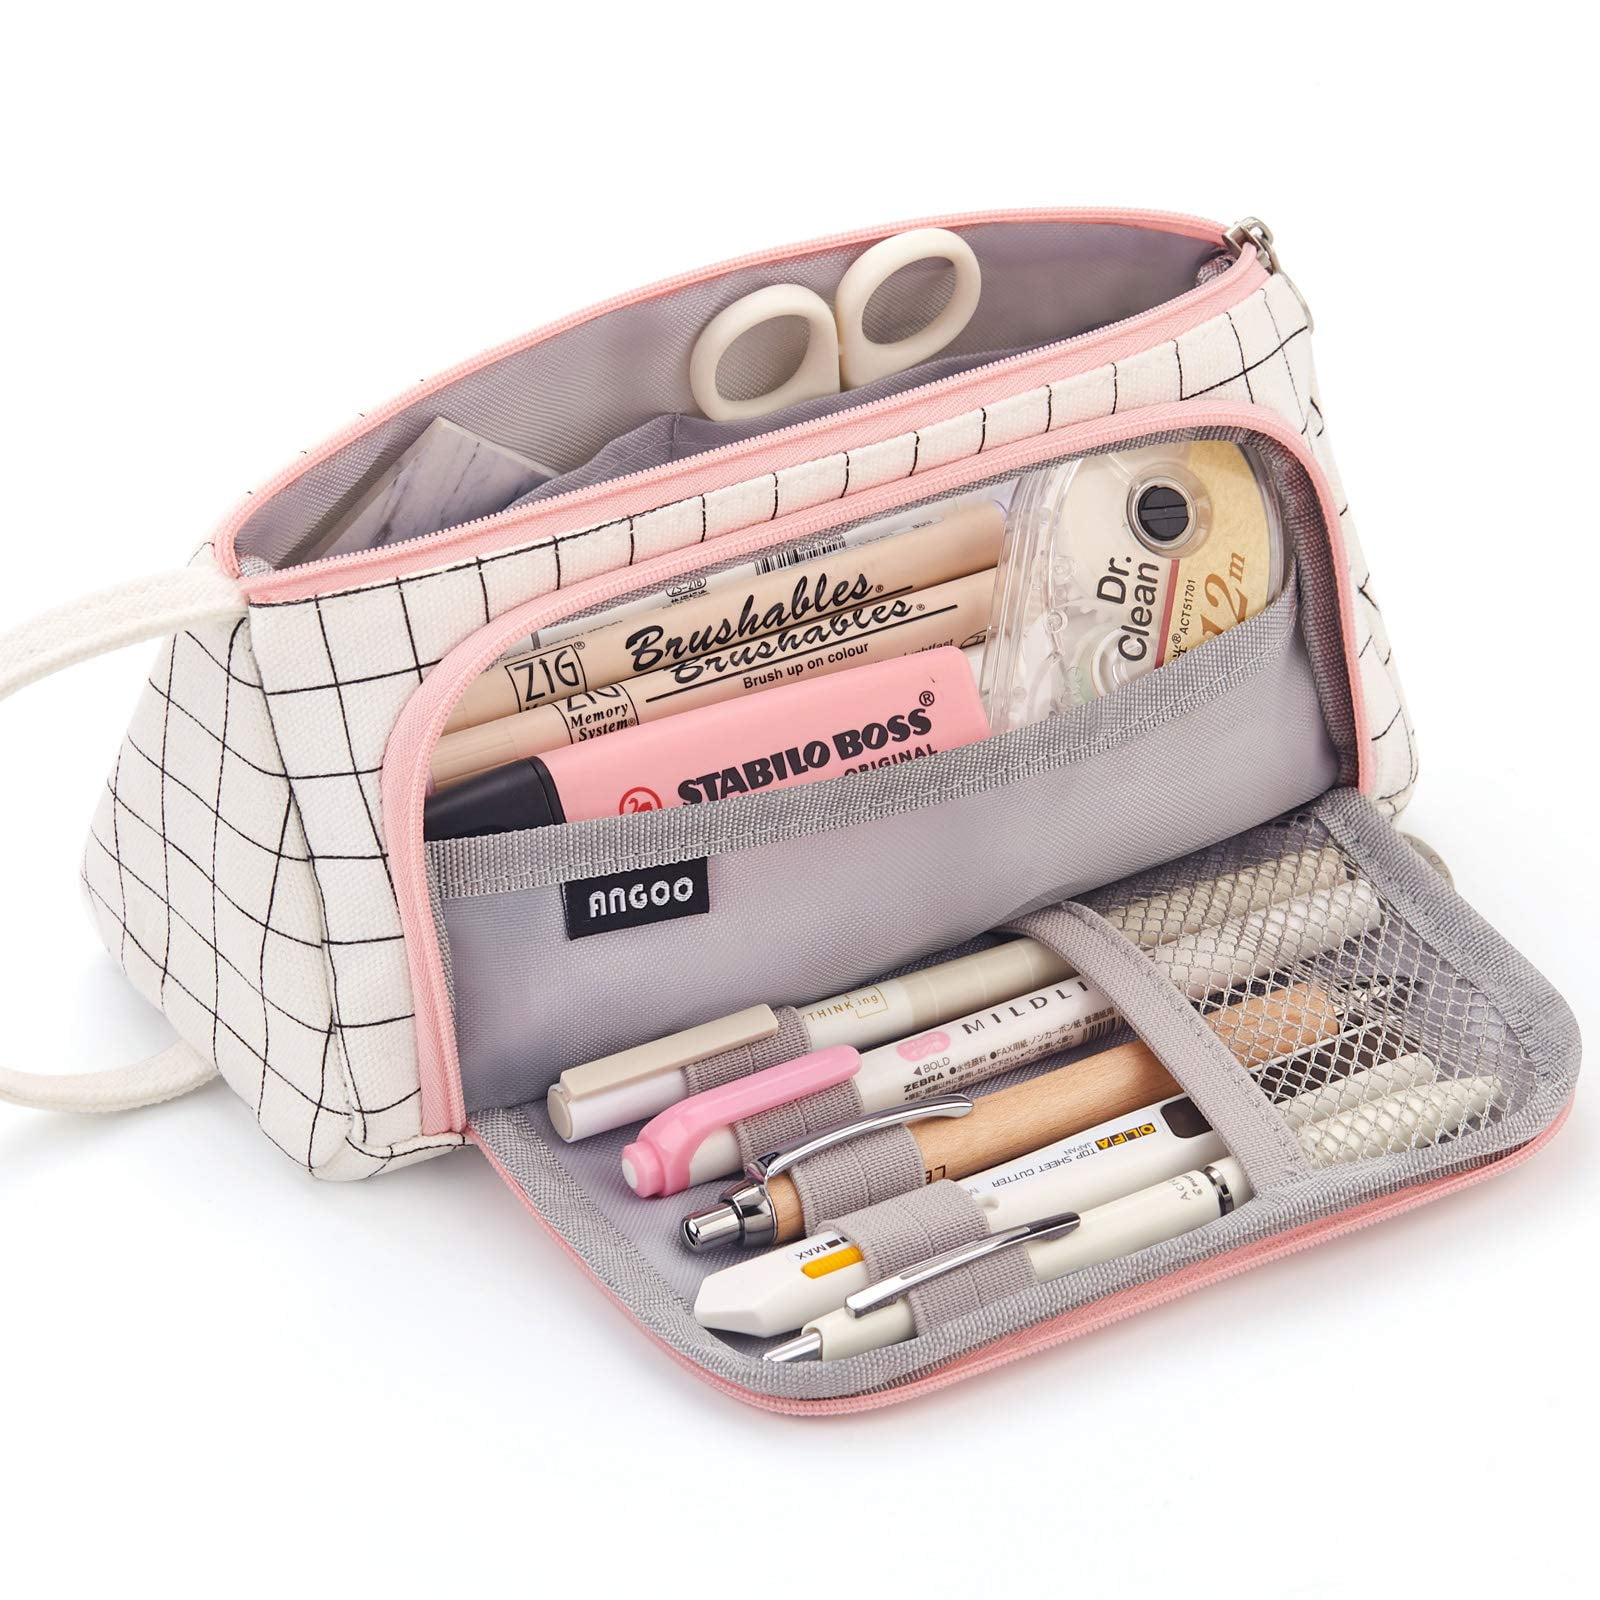 Chic Felt Pen Pencil Case Stationery Toiletry Jewelry Makeup Storage Bag LP 